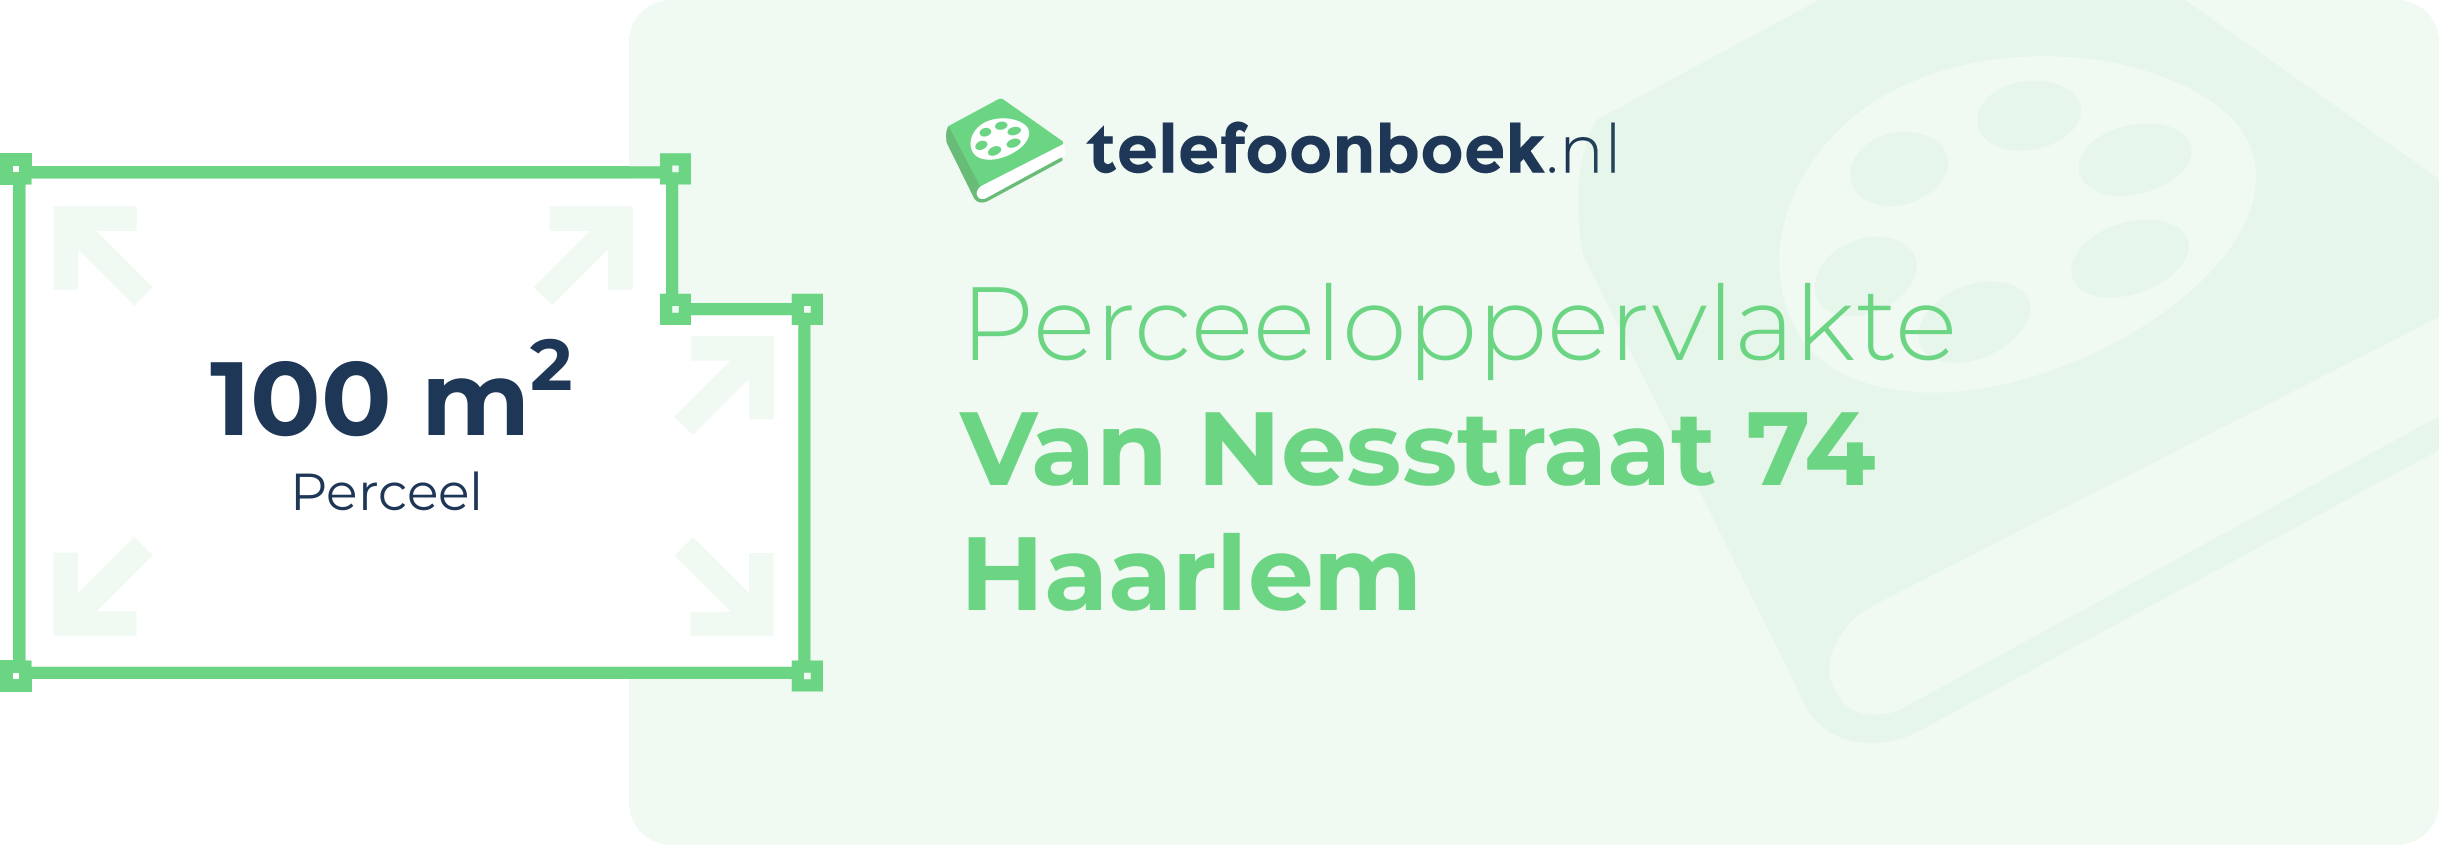 Perceeloppervlakte Van Nesstraat 74 Haarlem